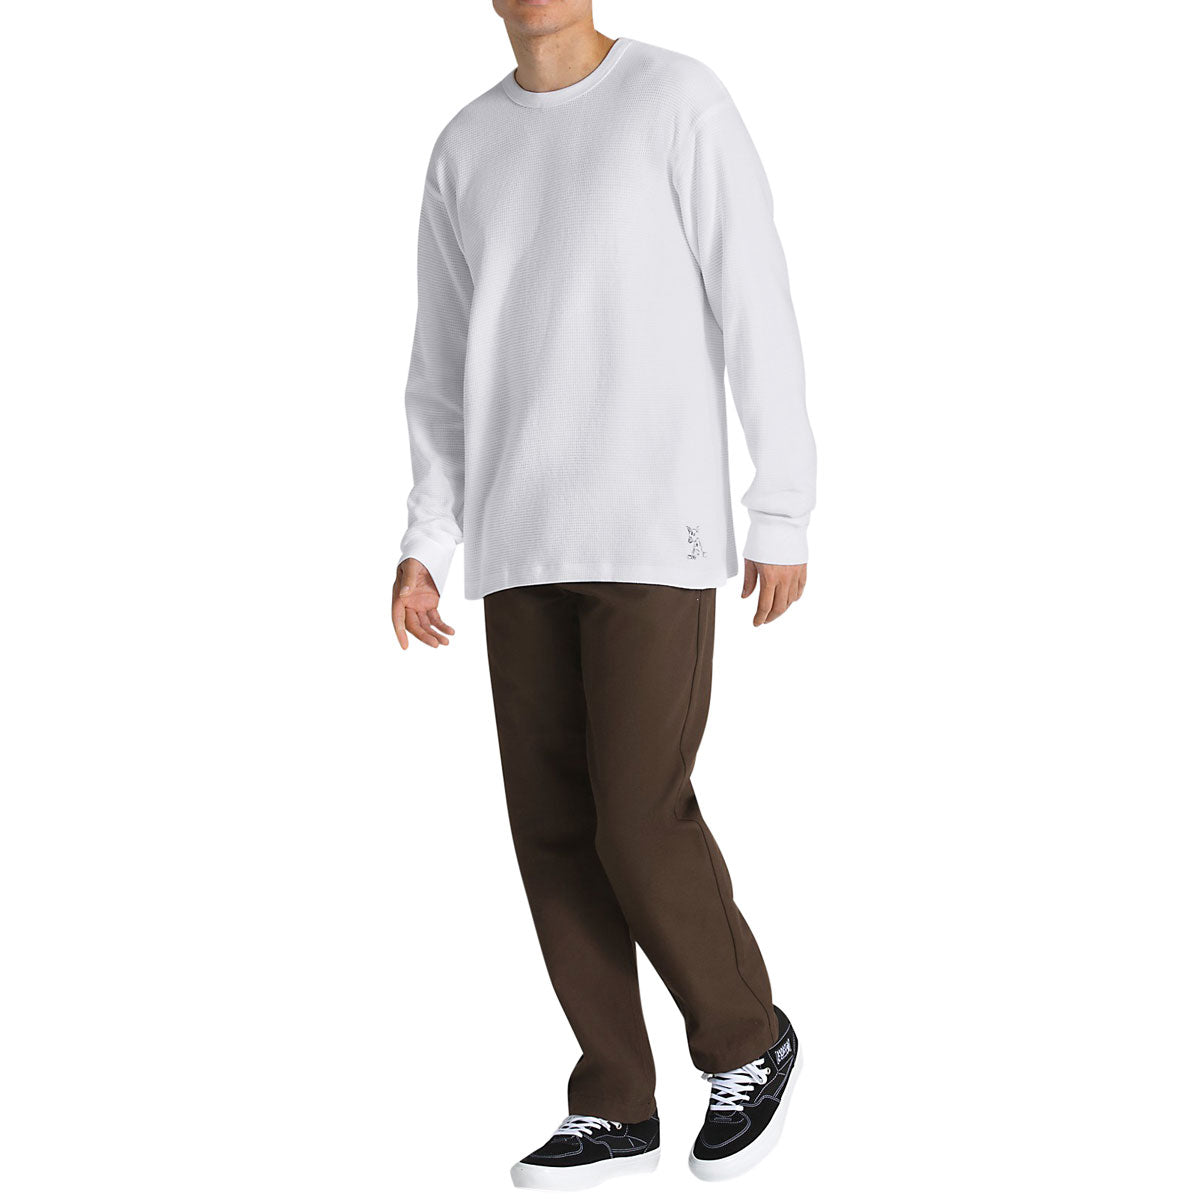 Vans Nick Michel Long Sleeve Thermal Shirt - White image 4